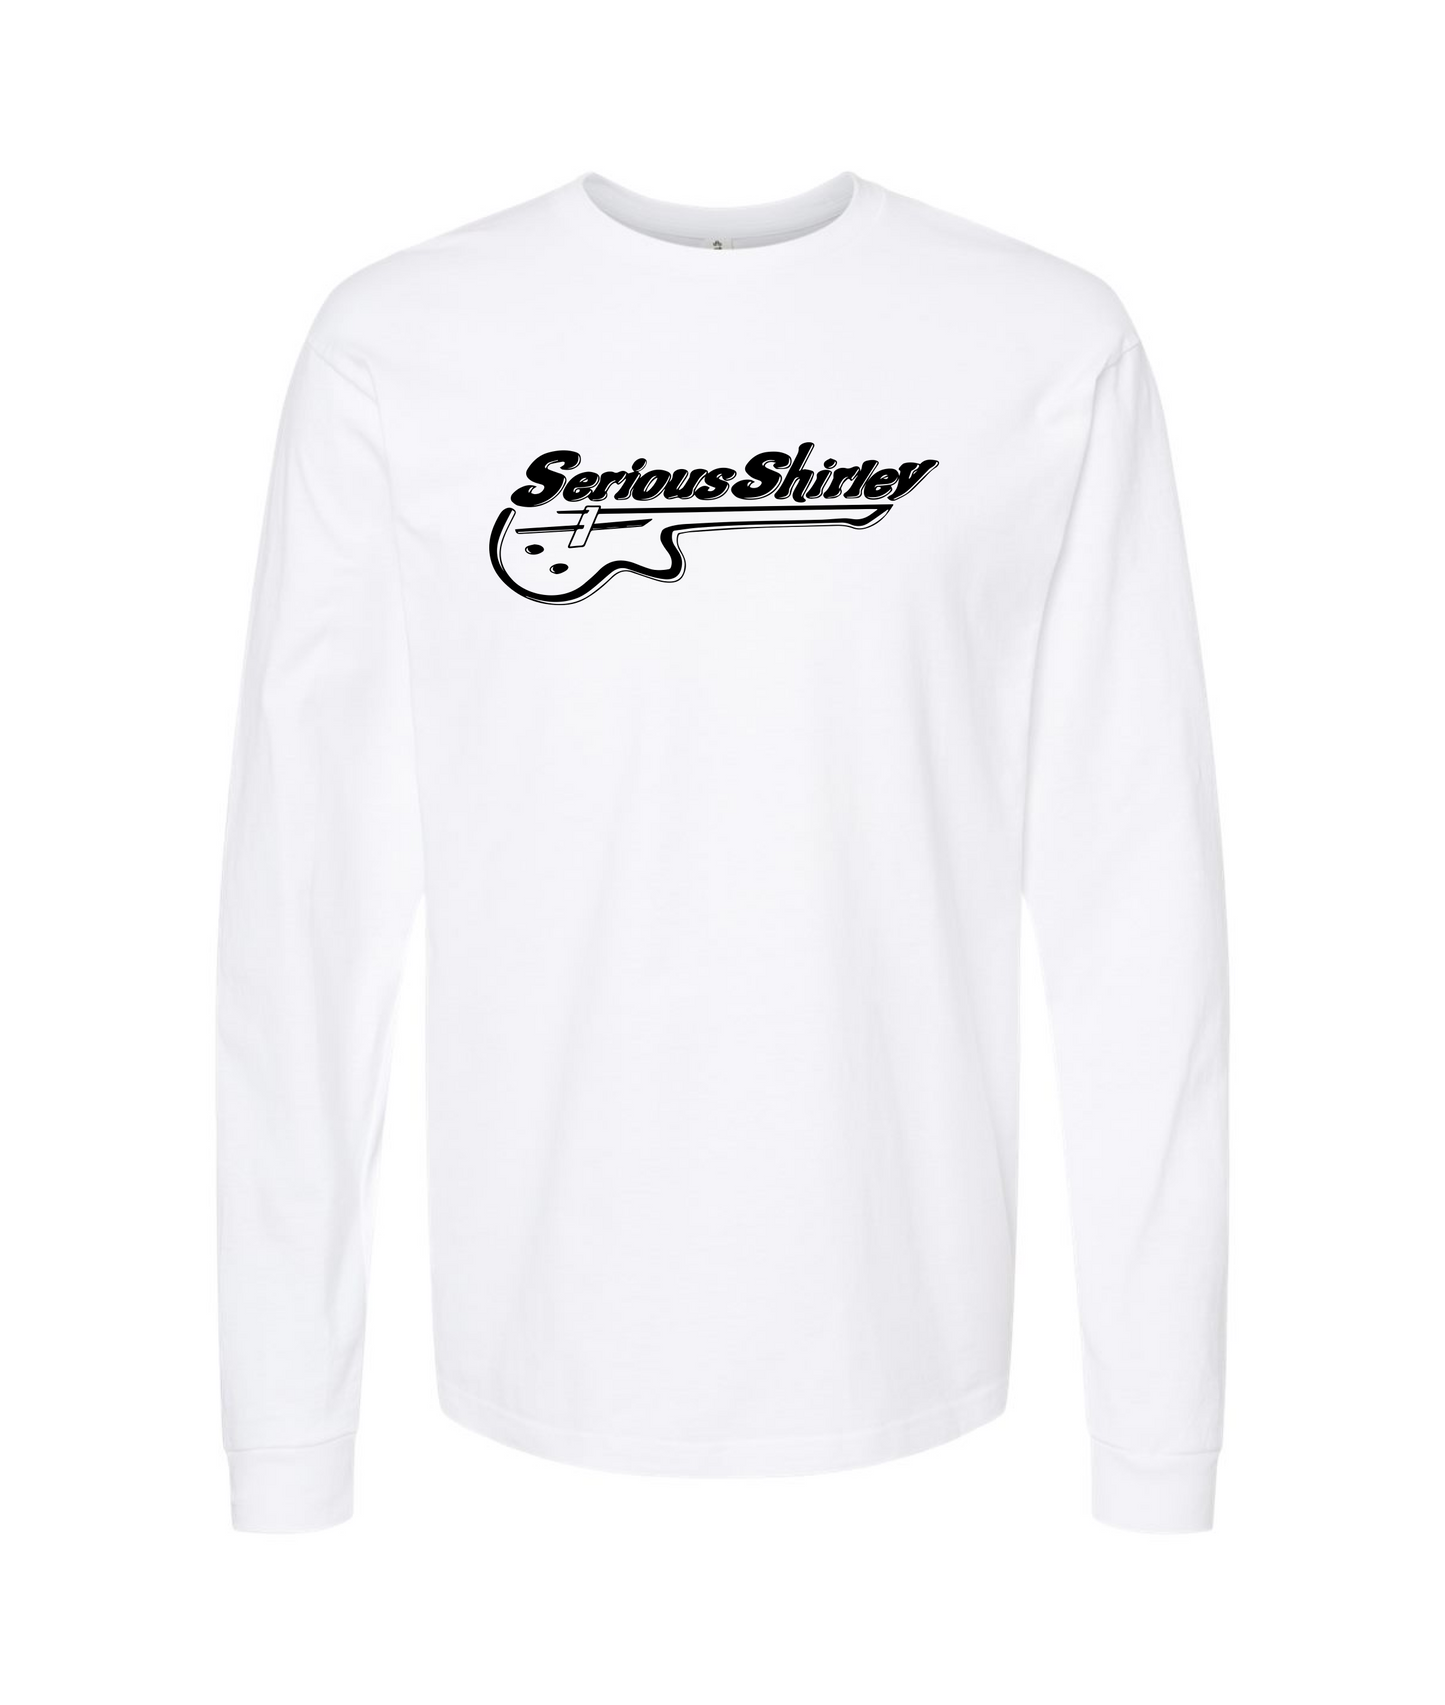 Serious Shirley - Guitar Logo - White Long Sleeve T